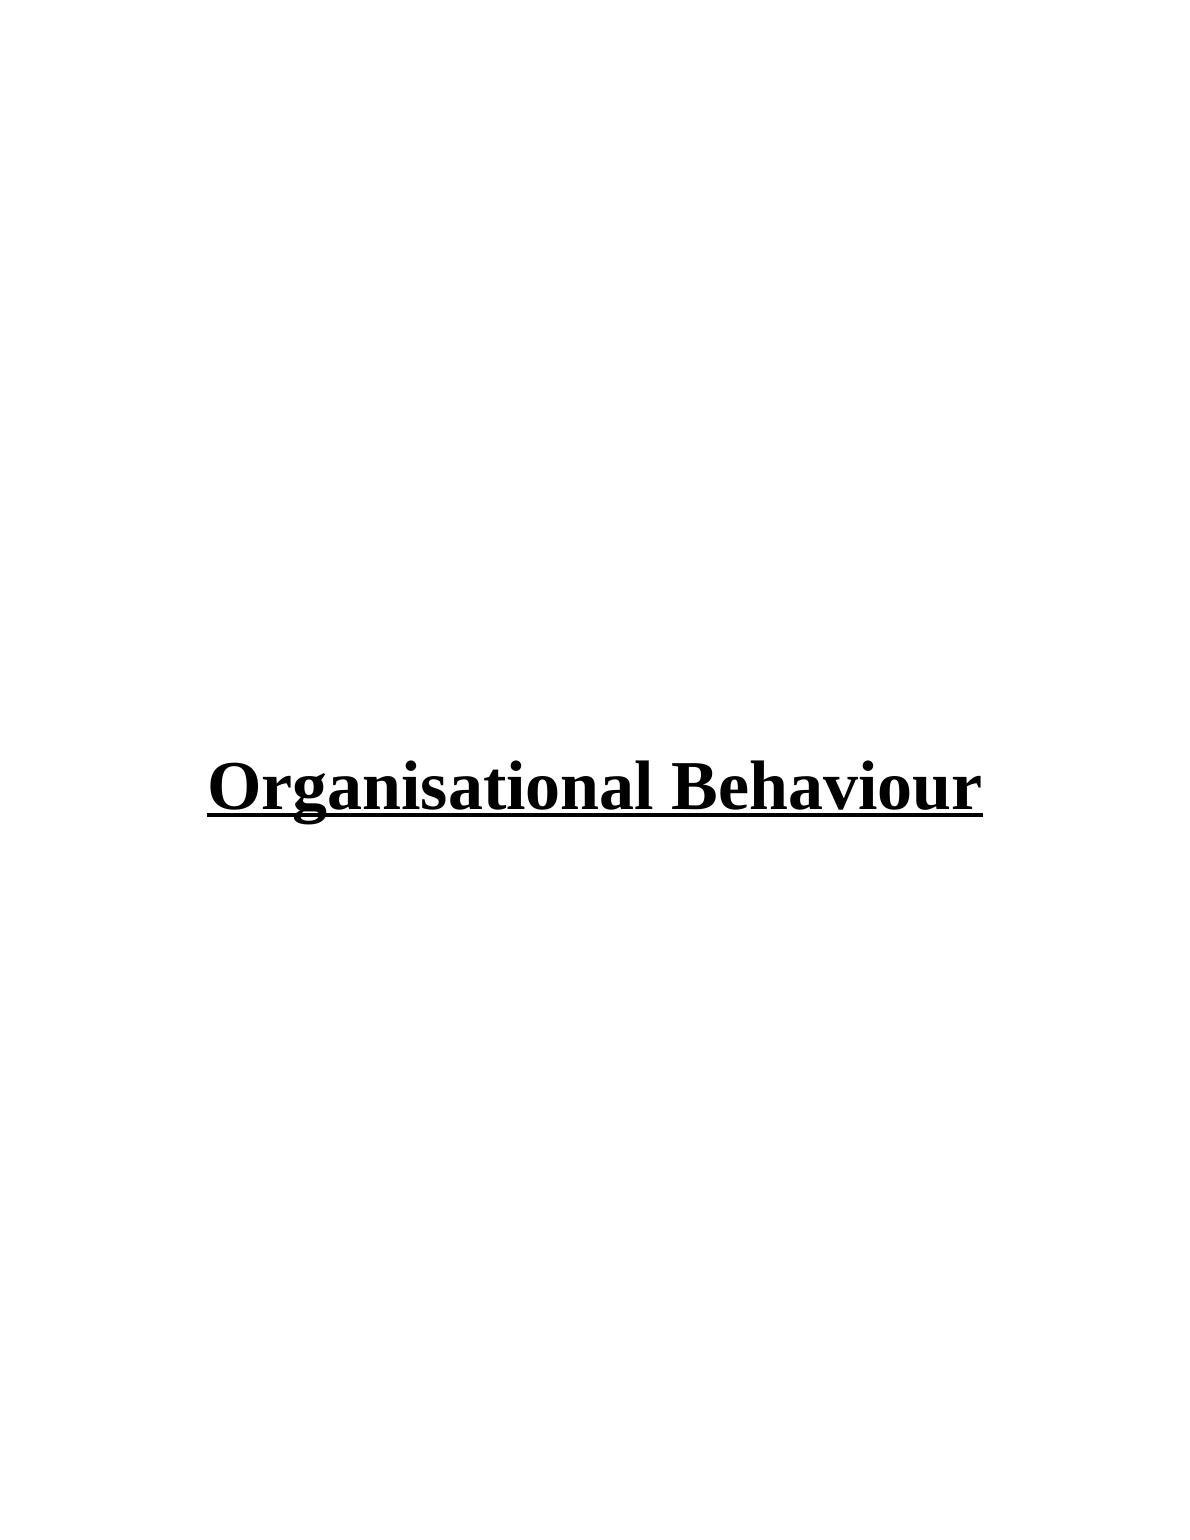 Philosophies Of Organizational Behavioural_1